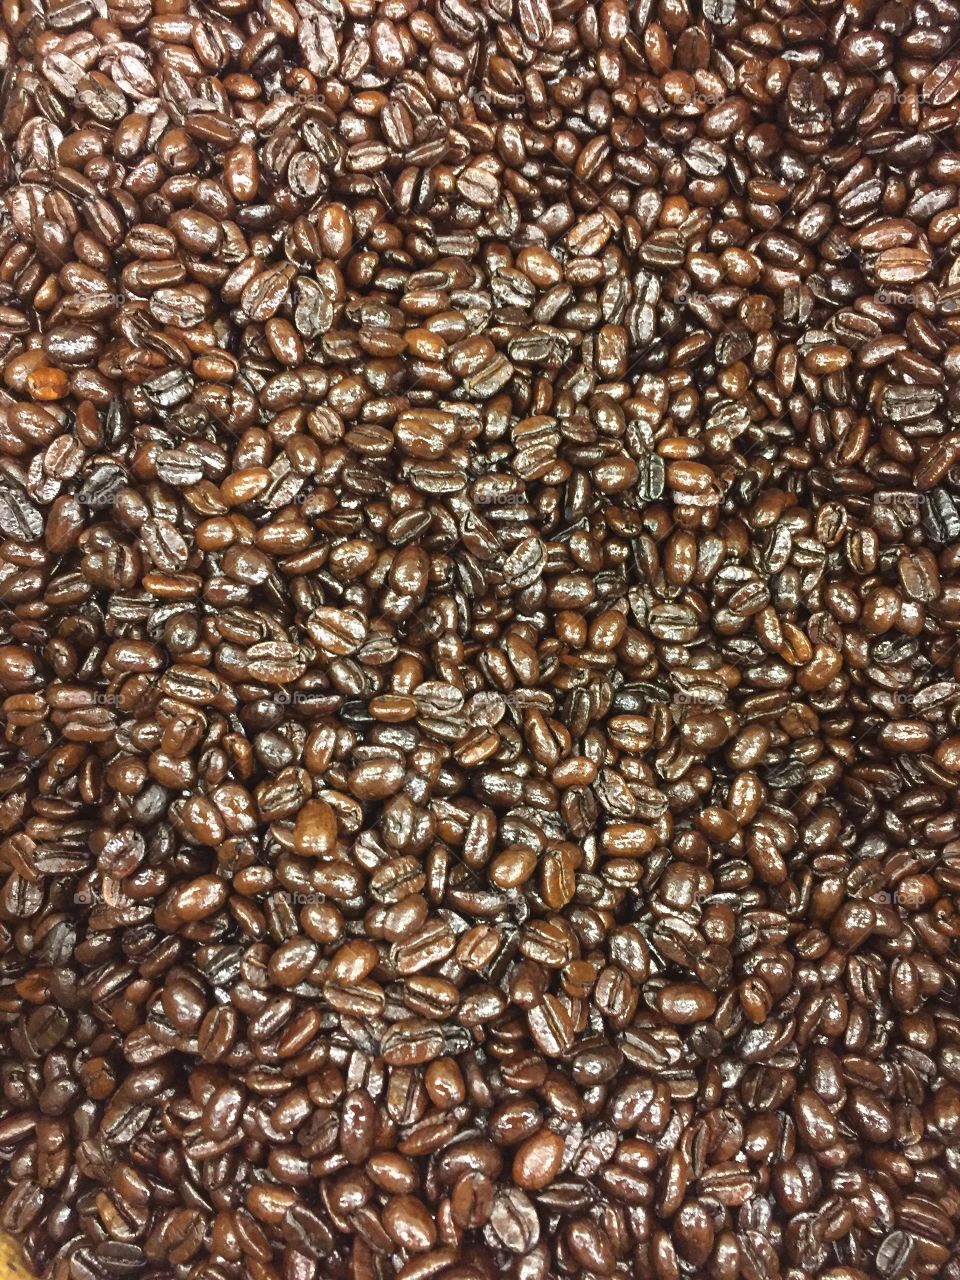 Overhead view of dark coffee beans